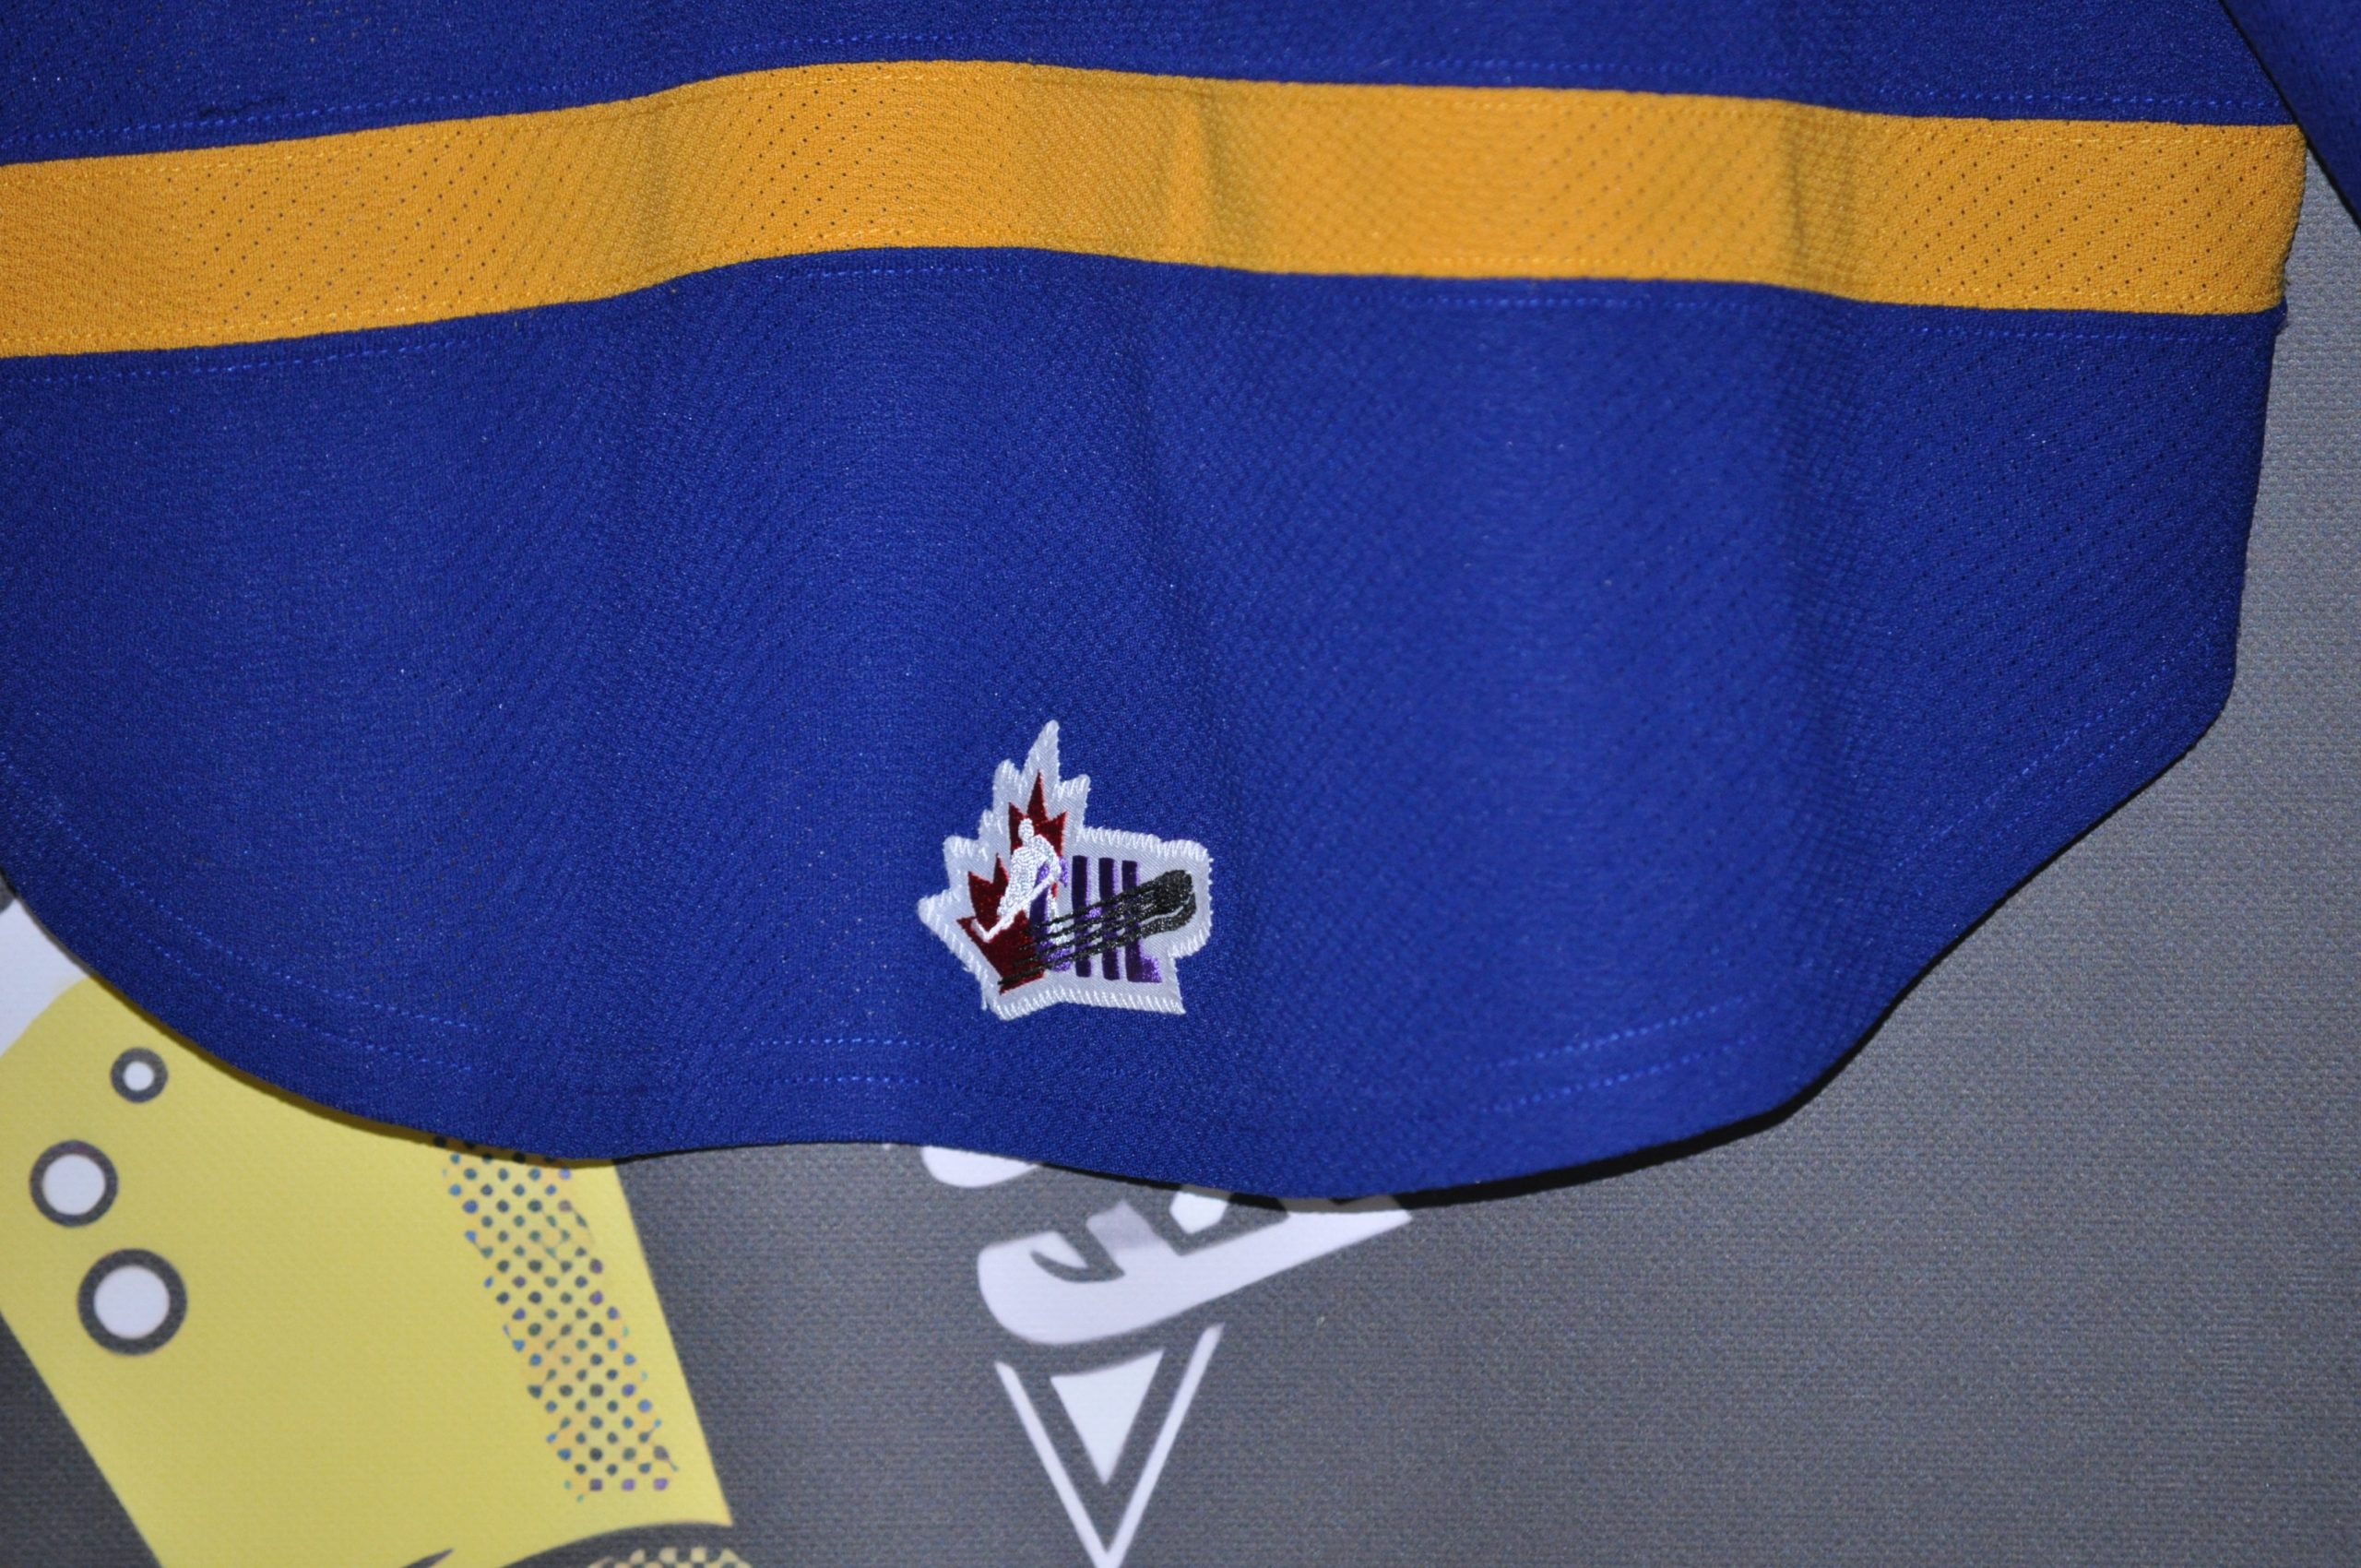 2018-19 WHL Saskatoon Blades #17 Eric Florchuk Game Worn jersey.